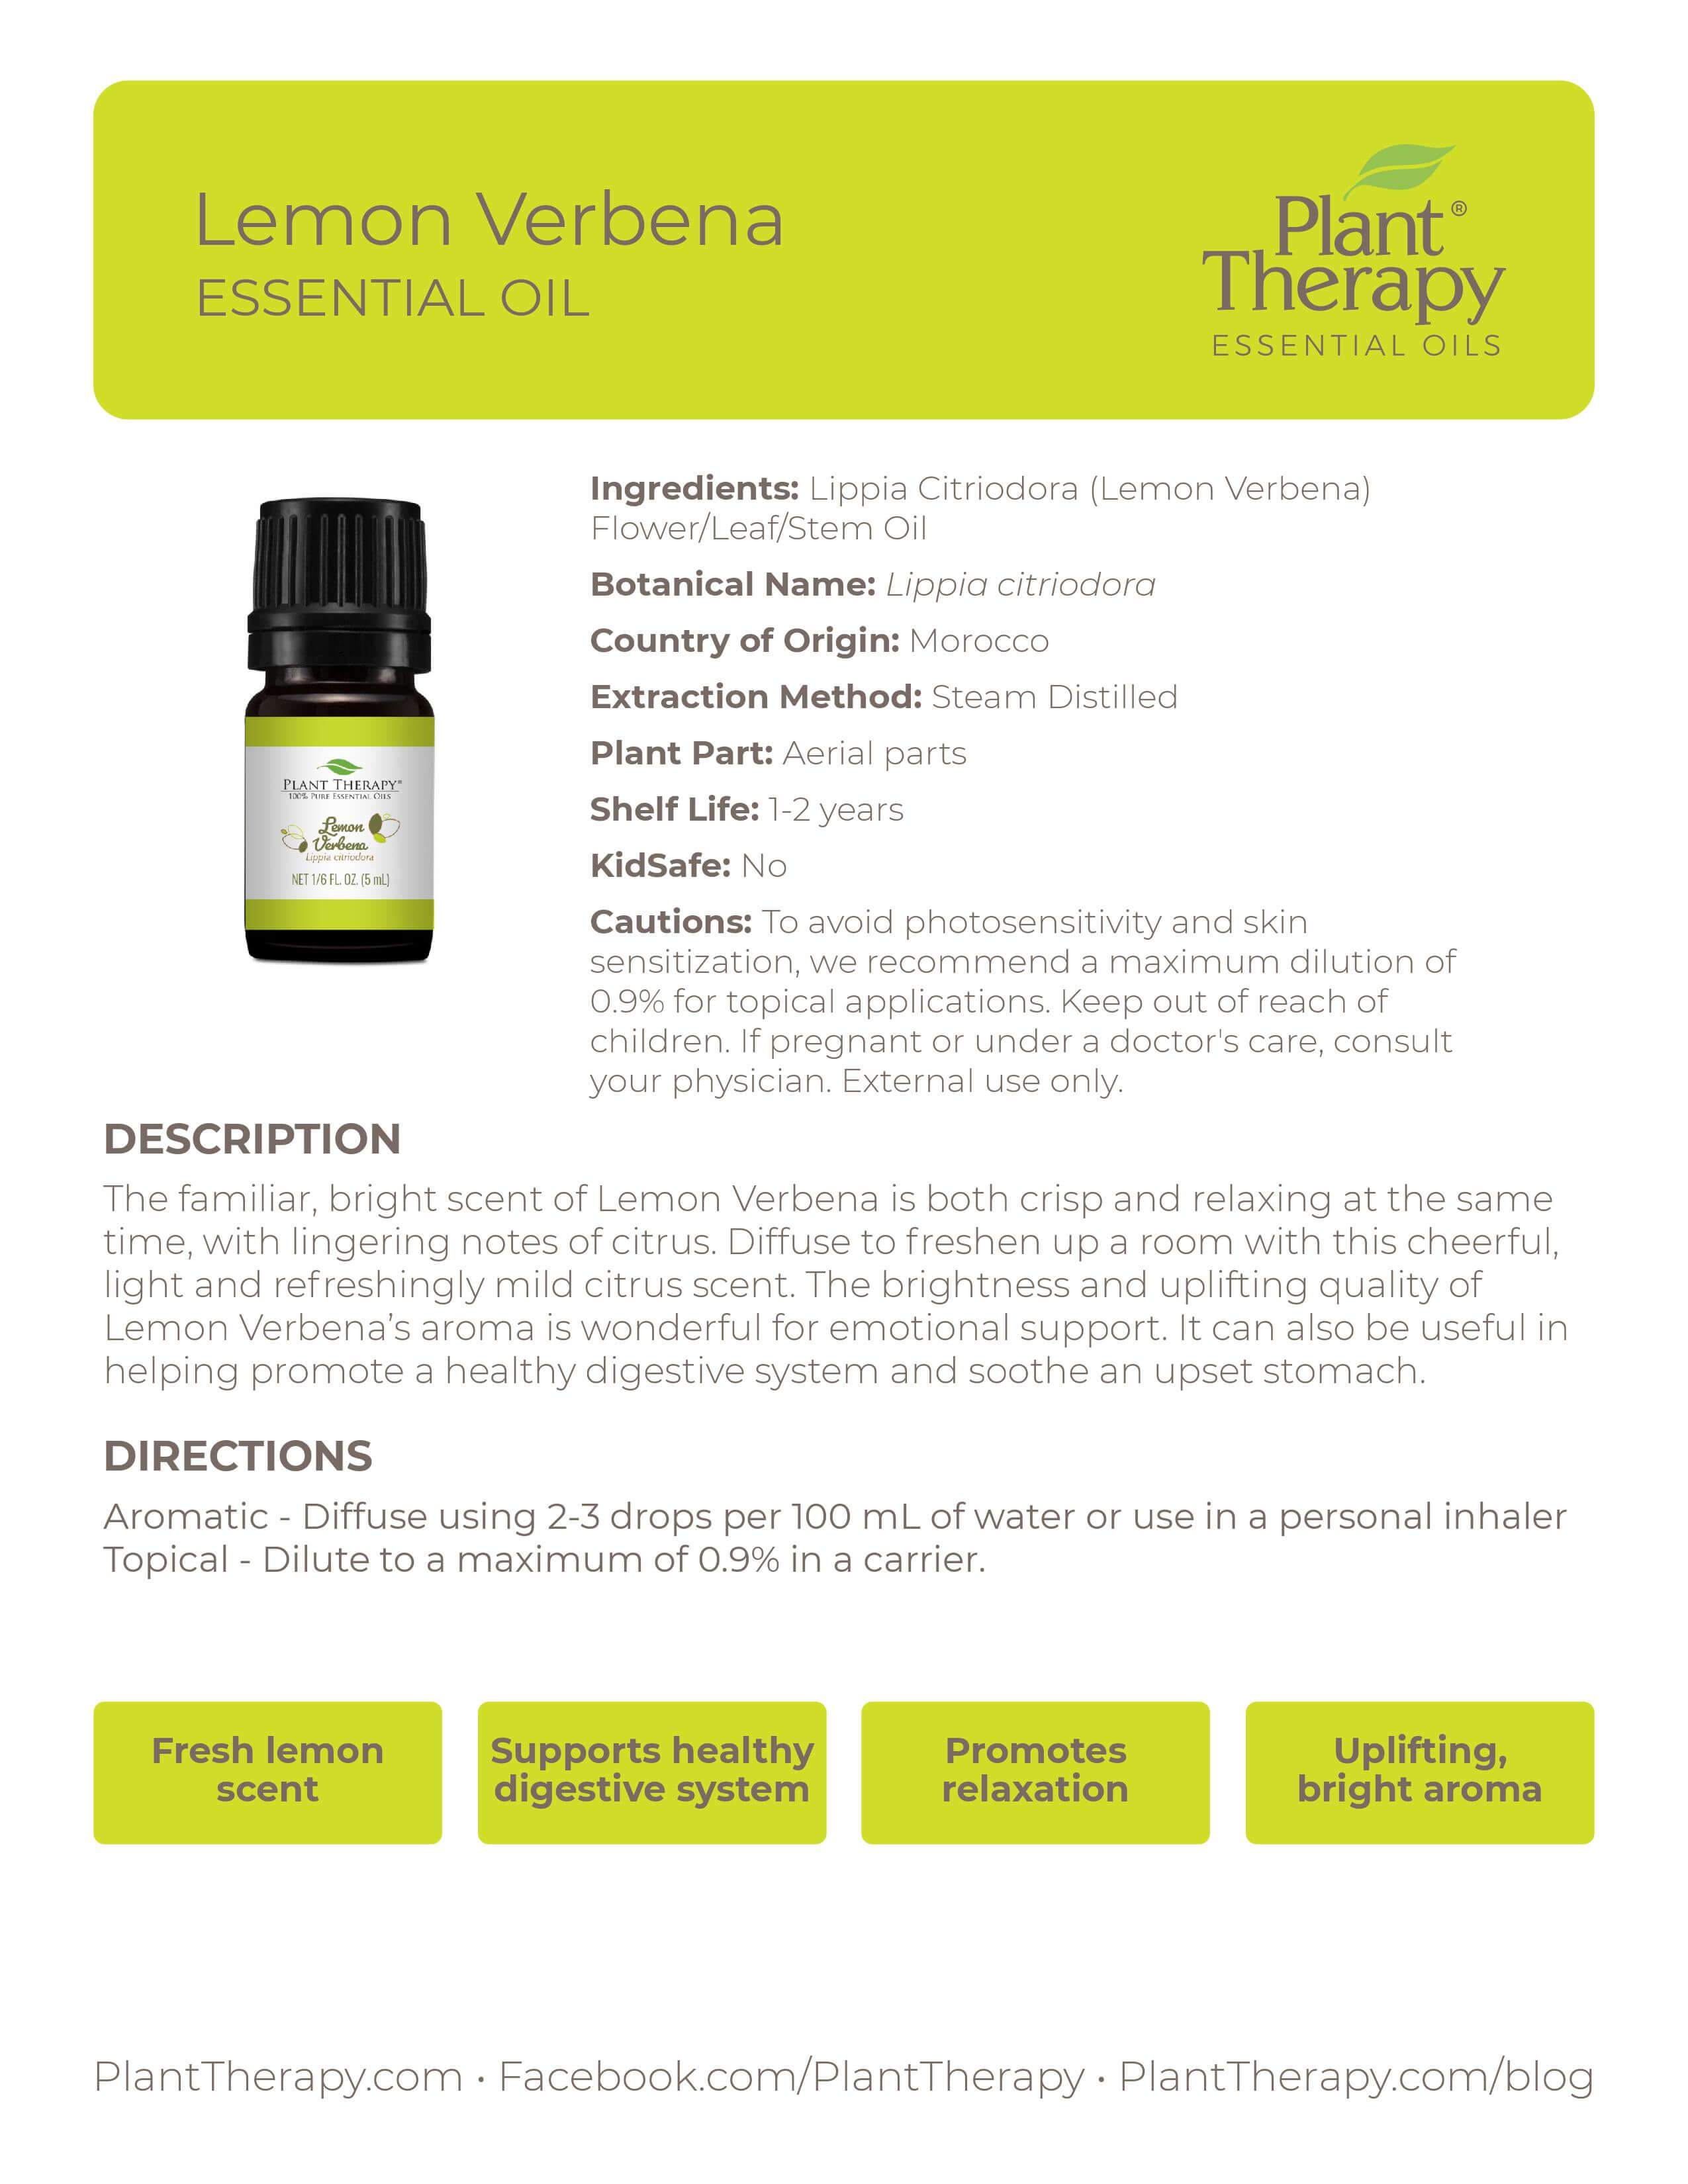 Lemon Verbena Essential Oil Uses and Benefits